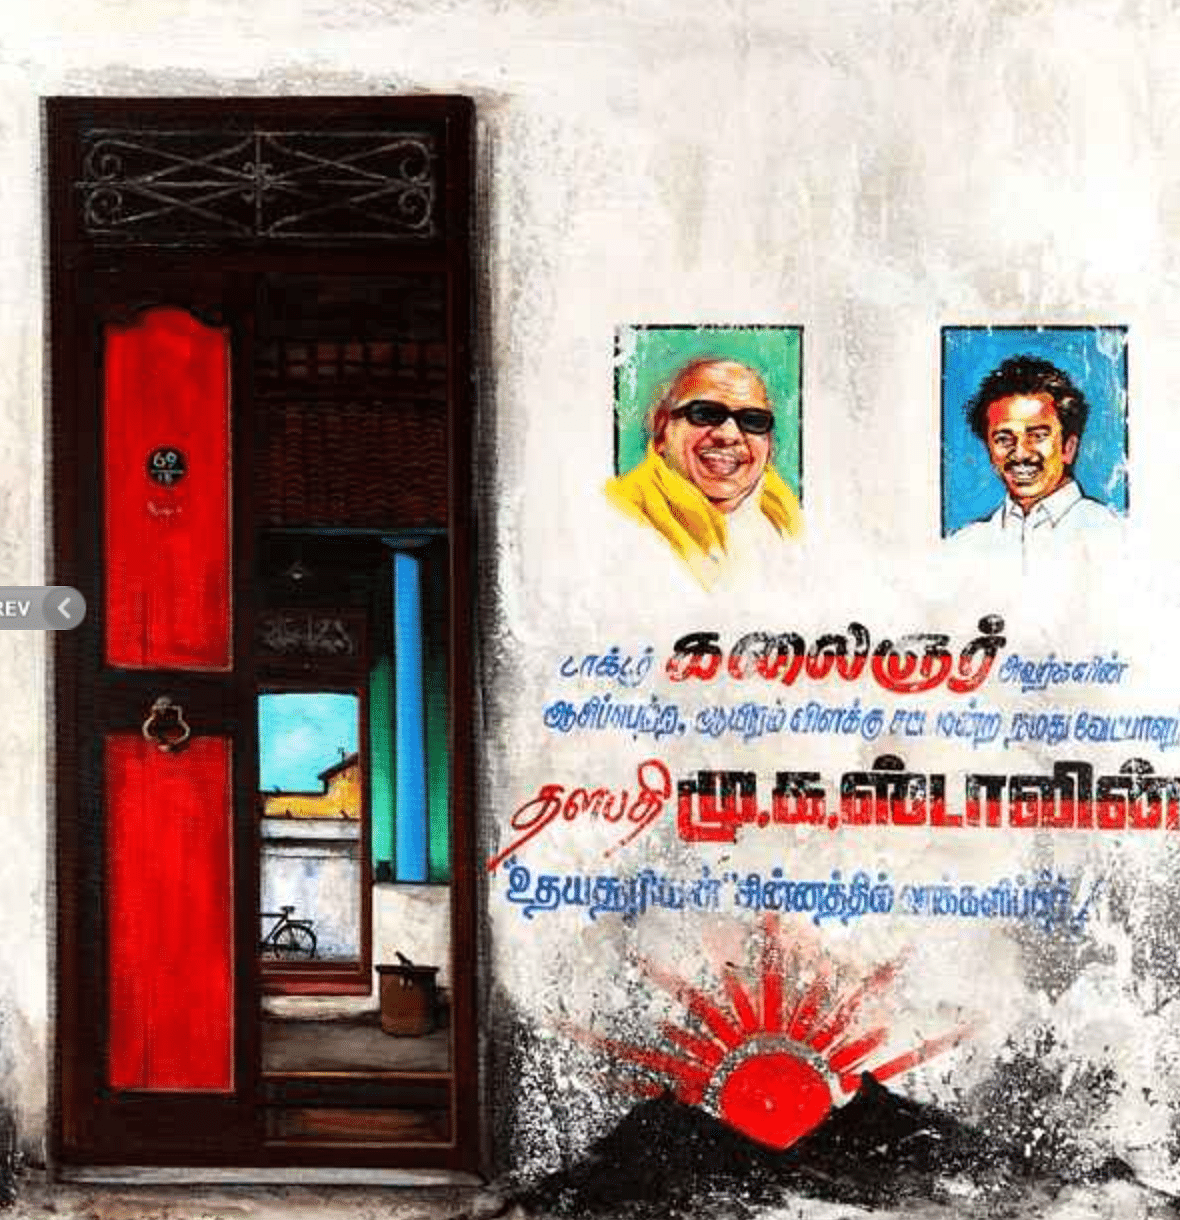 MF Hussain, FA Razack, Adimoolam have a style and Santhana Krishnan made beautiful doors his signature.